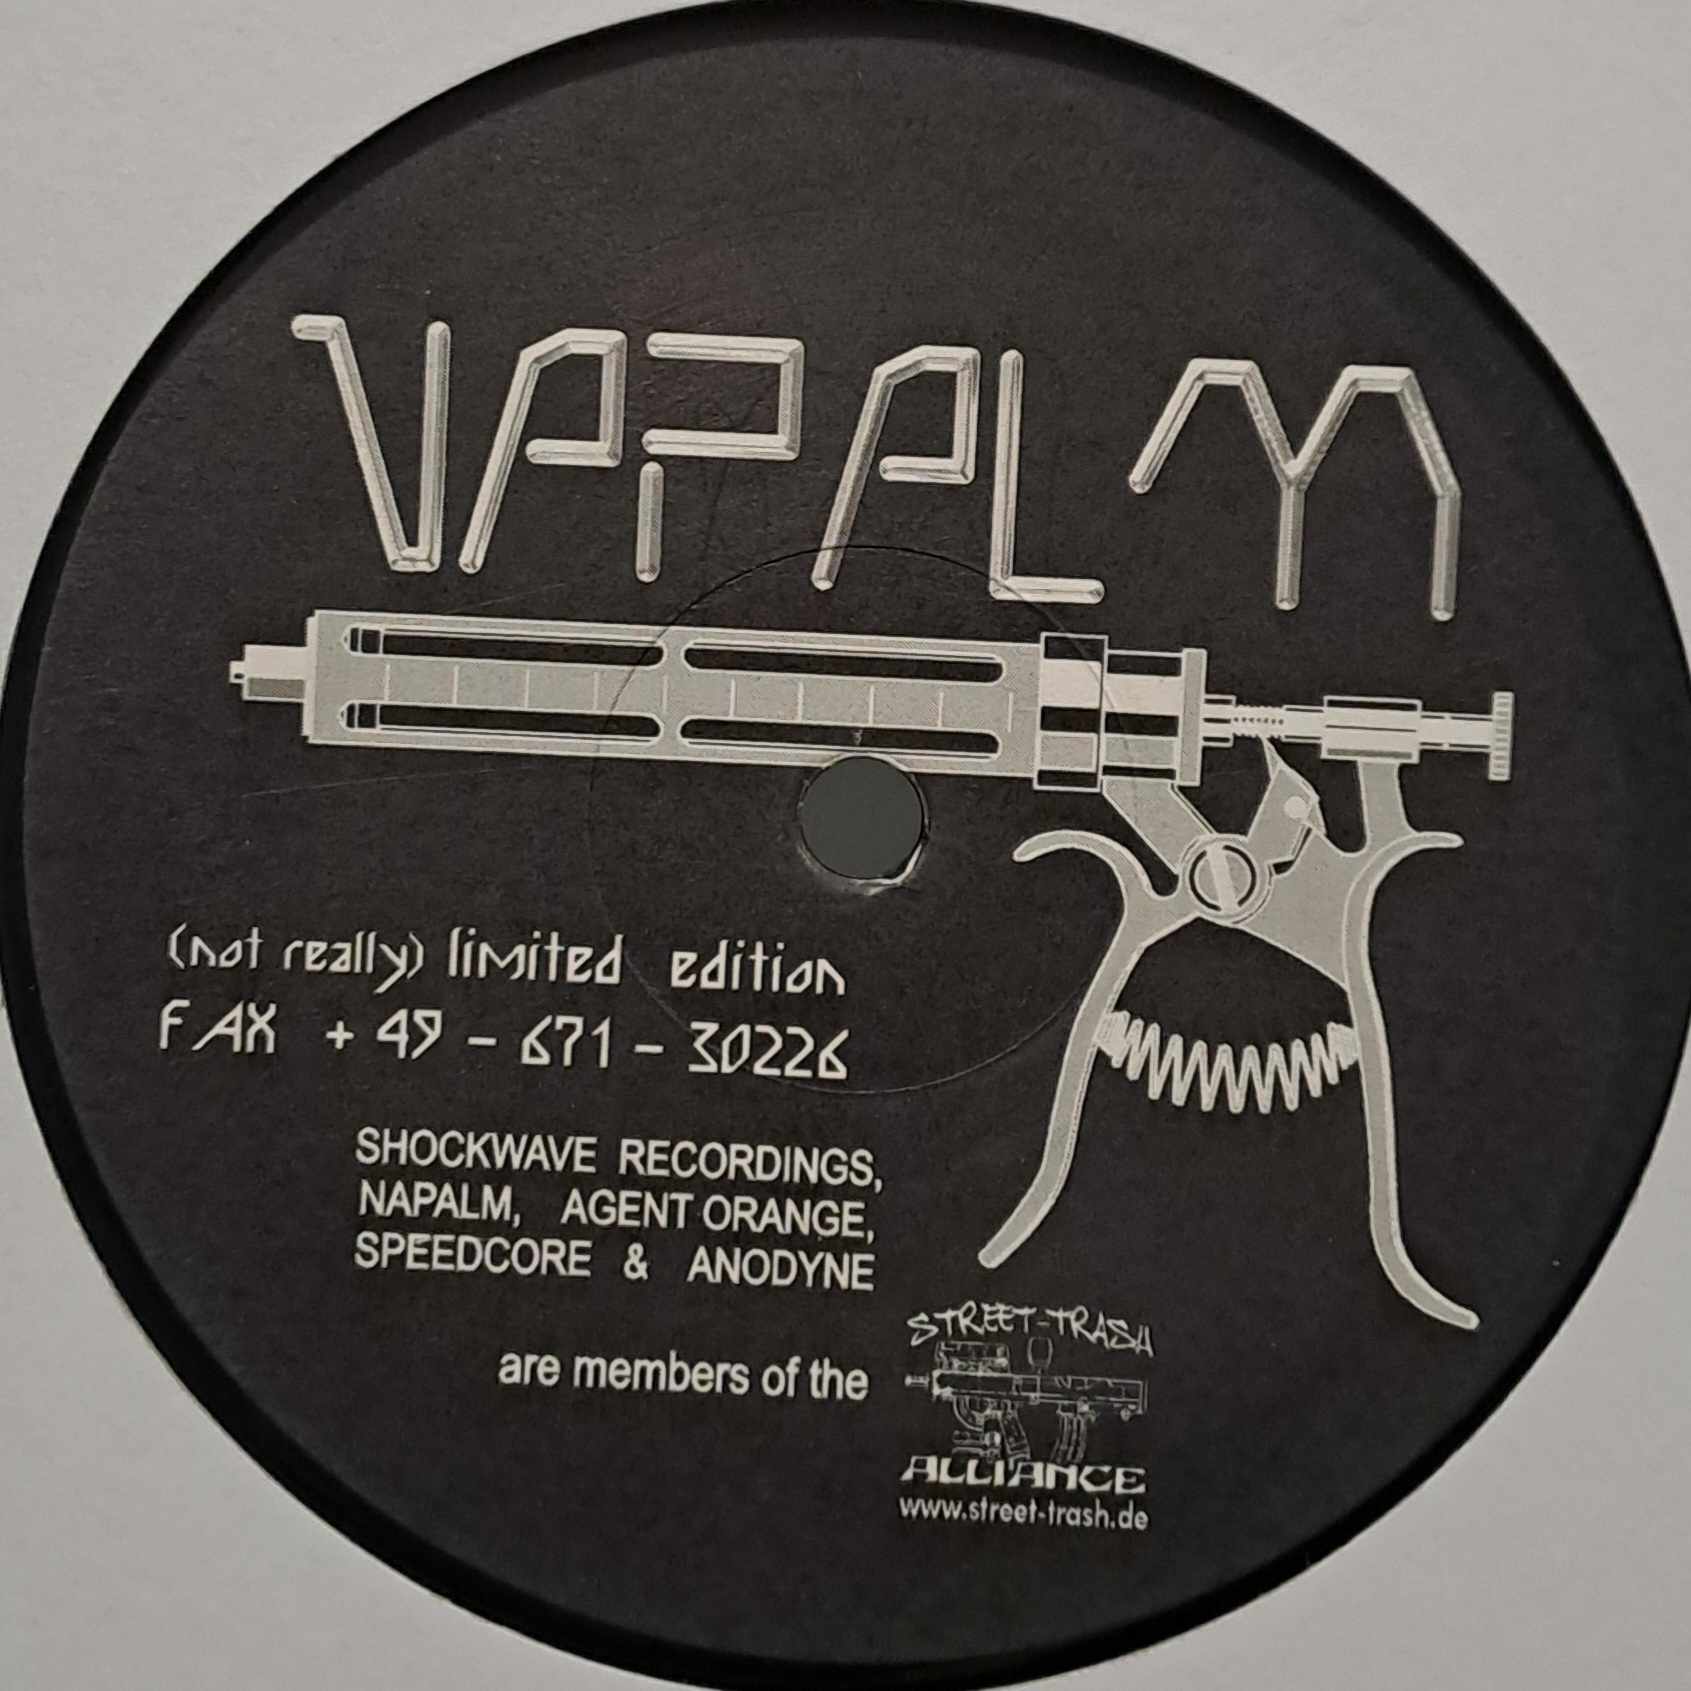 Napalm 15 - vinyle hardcore